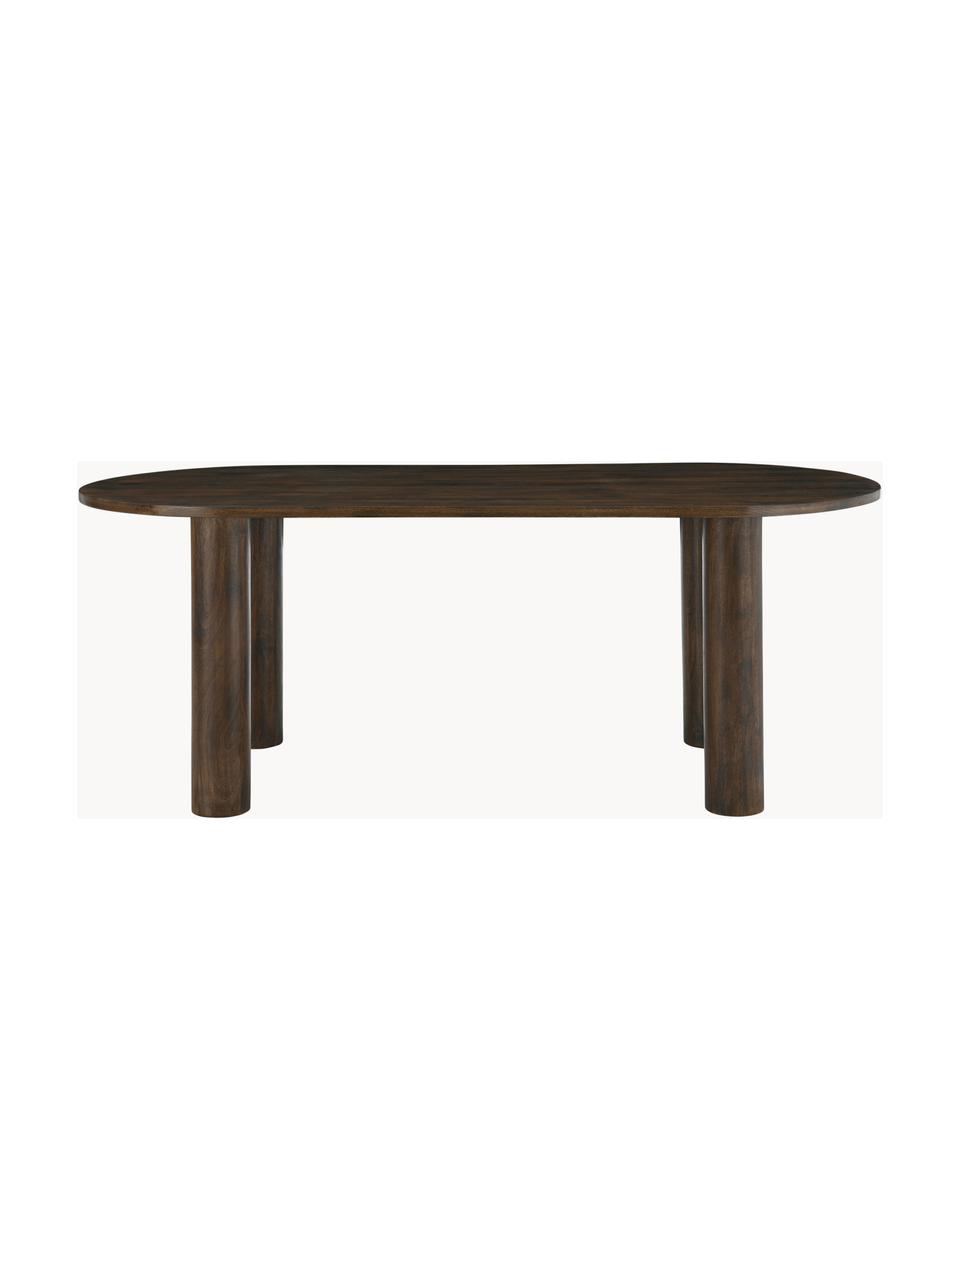 Oválny jedálenský stôl z mangového dreva Grow, Mangové drevo, lakované, Mangové drevo, Š 200 x H 90 cm